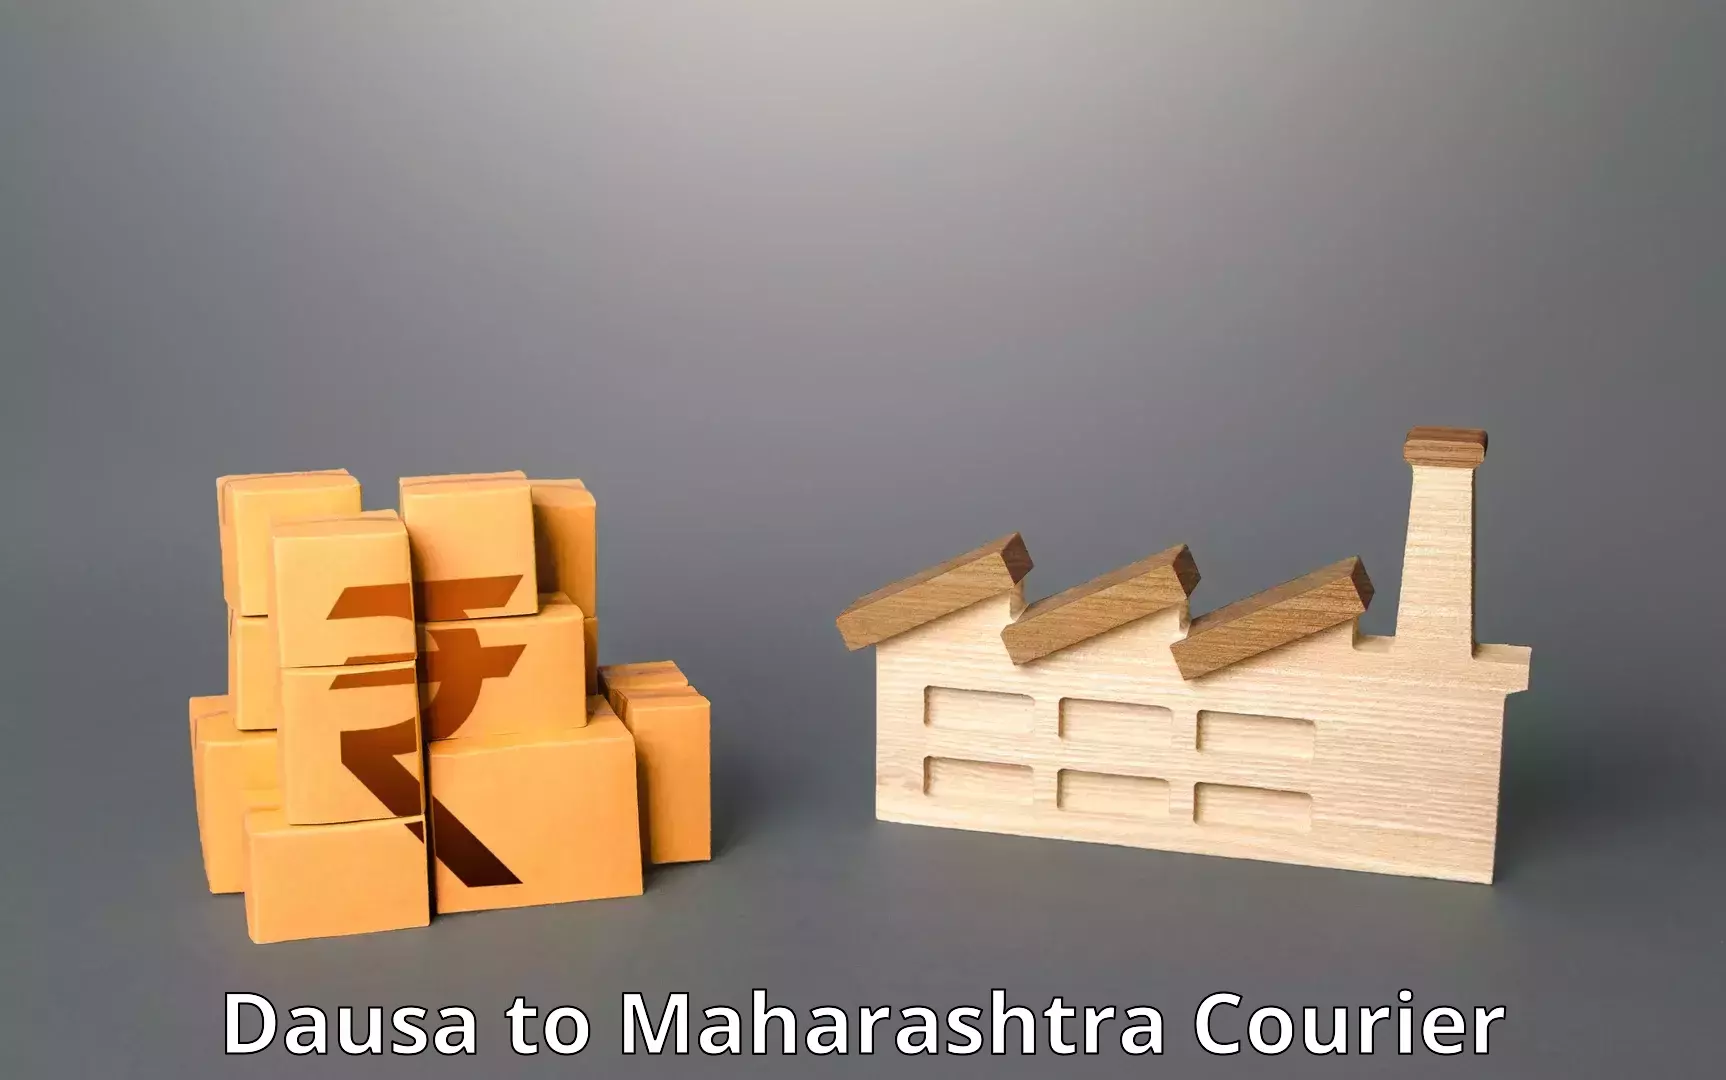 High-speed parcel service Dausa to Maharashtra